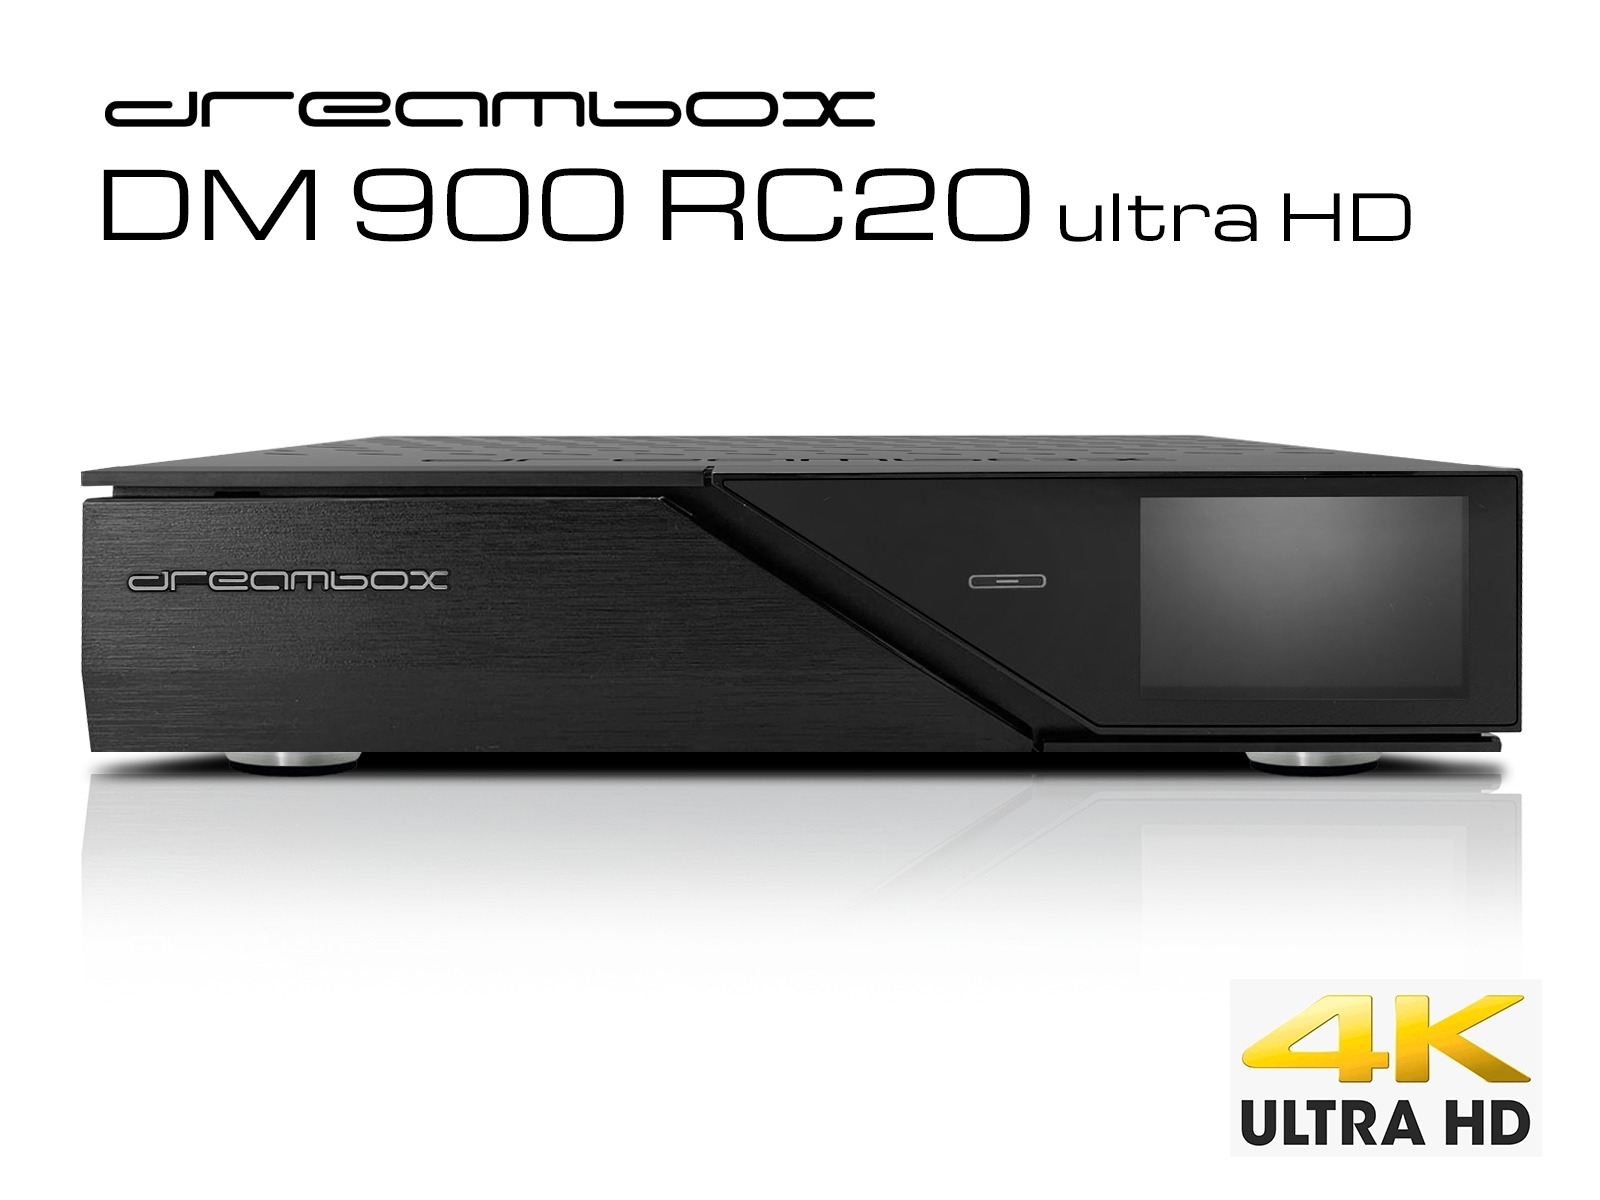 Dreambox DM900 RC20 UHD 4K 1x DVB-S2 FBC Twin Tuner 500 GB HDD E2 Linux PVR Receiver